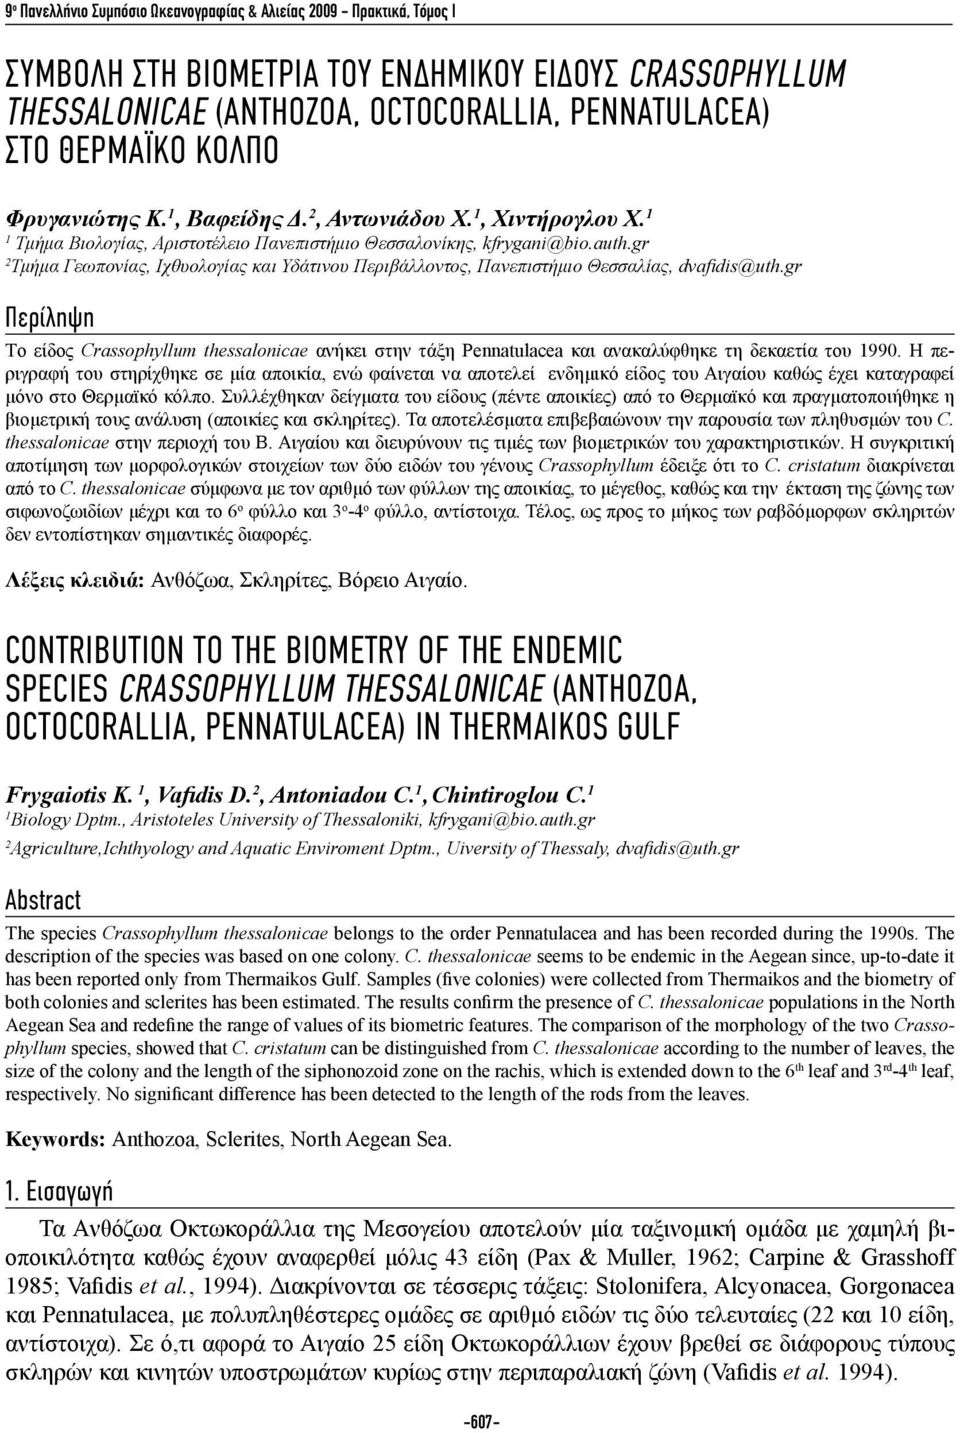 gr 2 Τμήμα Γεωπονίας, Ιχθυολογίας και Υδάτινου Περιβάλλοντος, Πανεπιστήμιο Θεσσαλίας, dvafidis@uth.